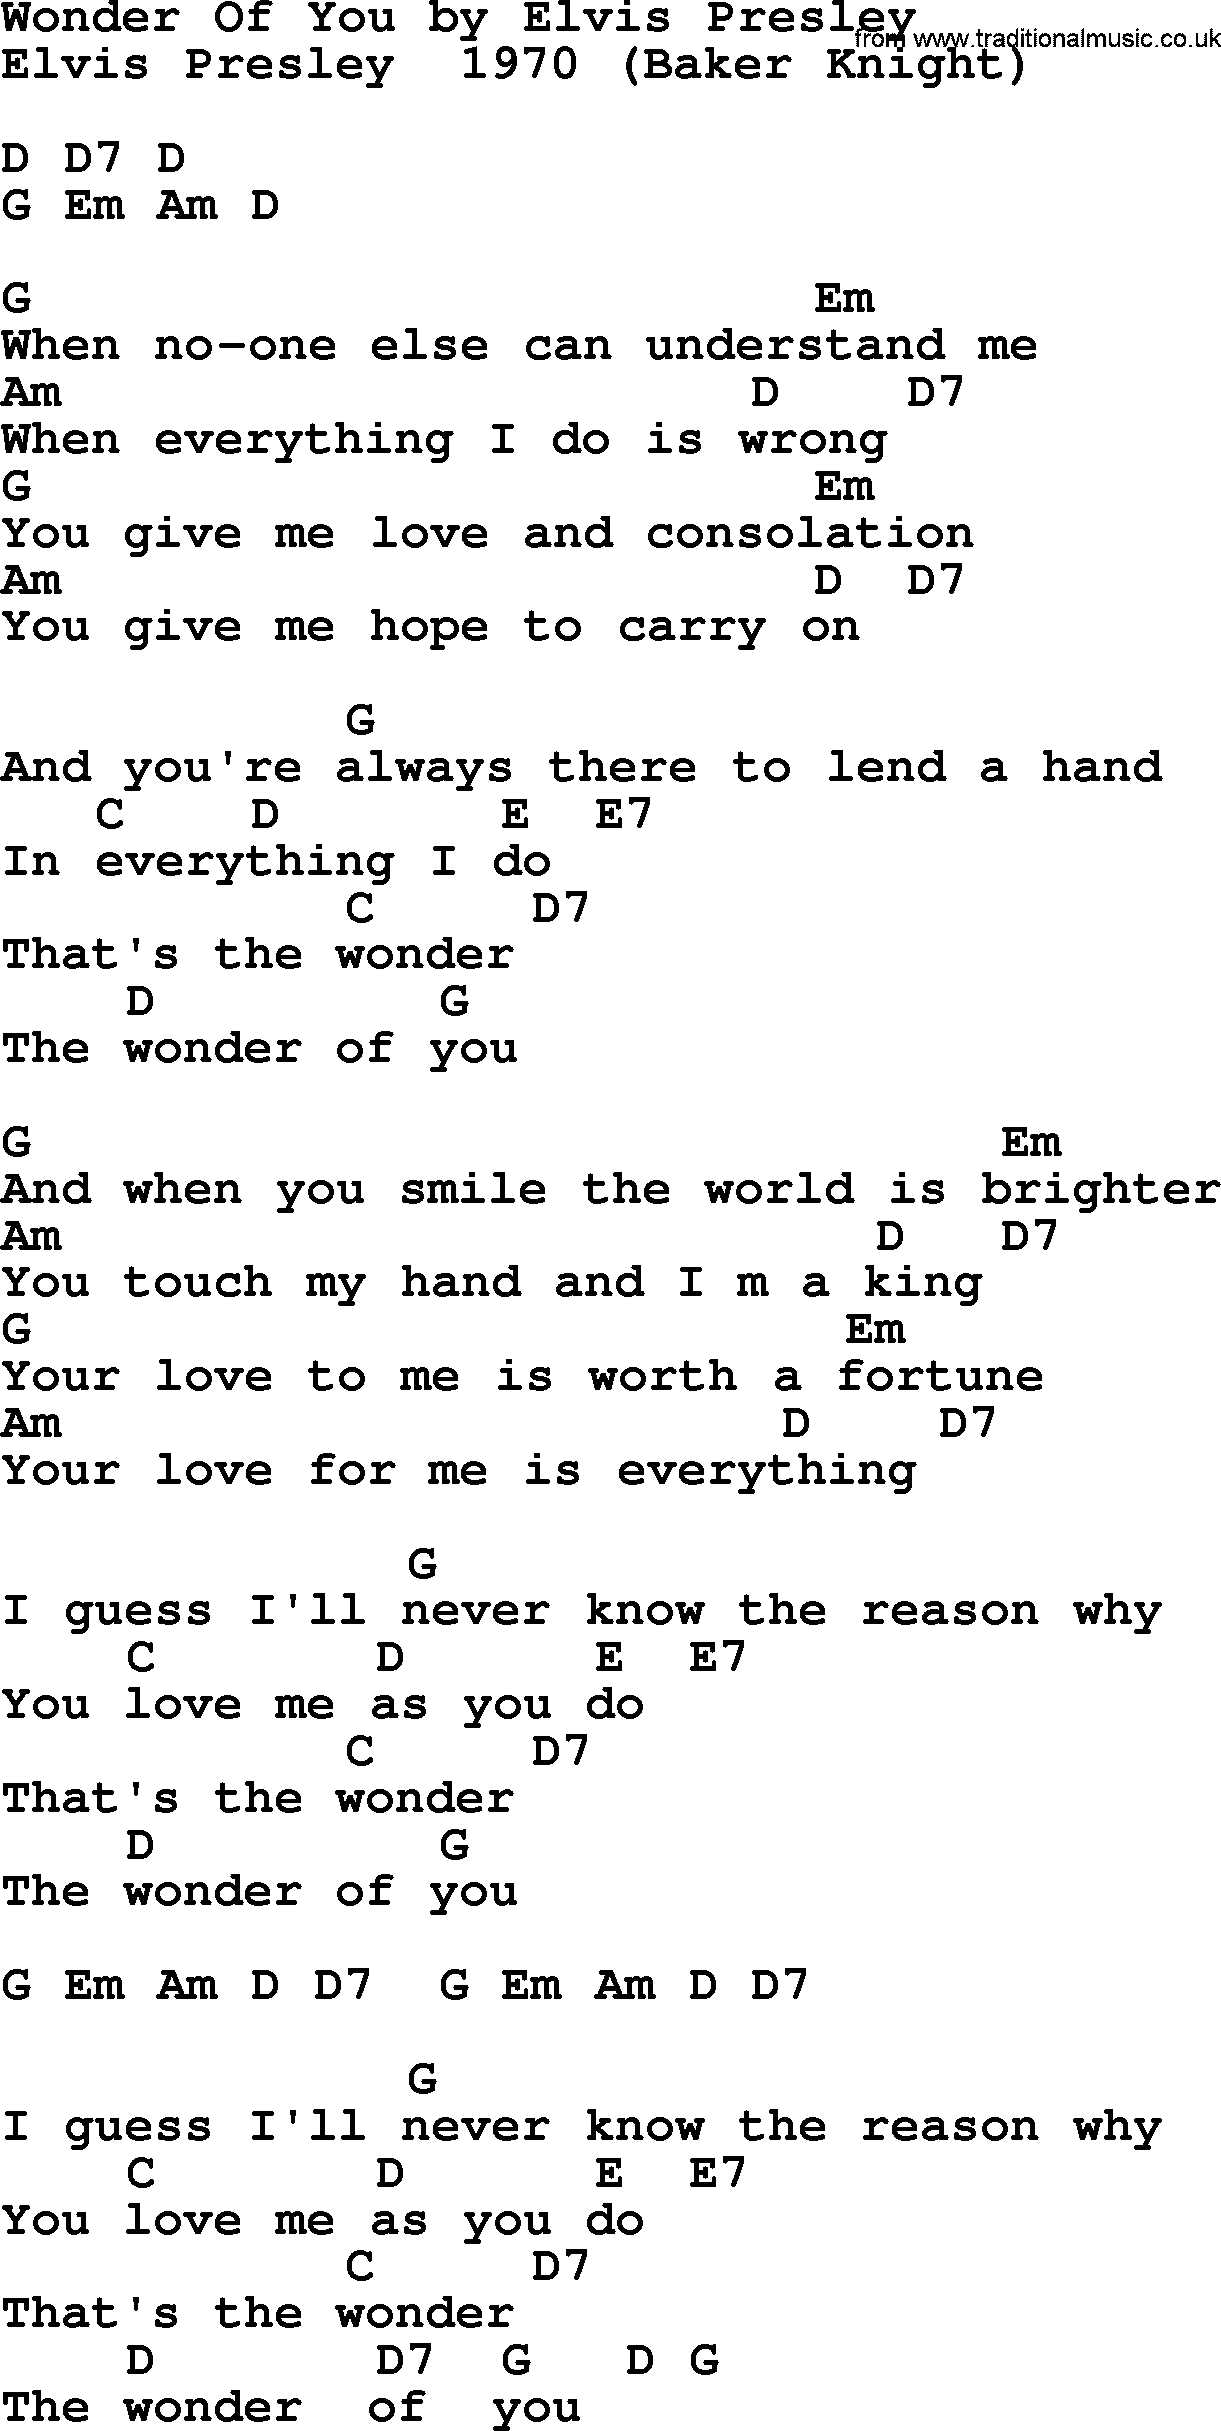 Elvis Presley song: Wonder Of You, lyrics and chords